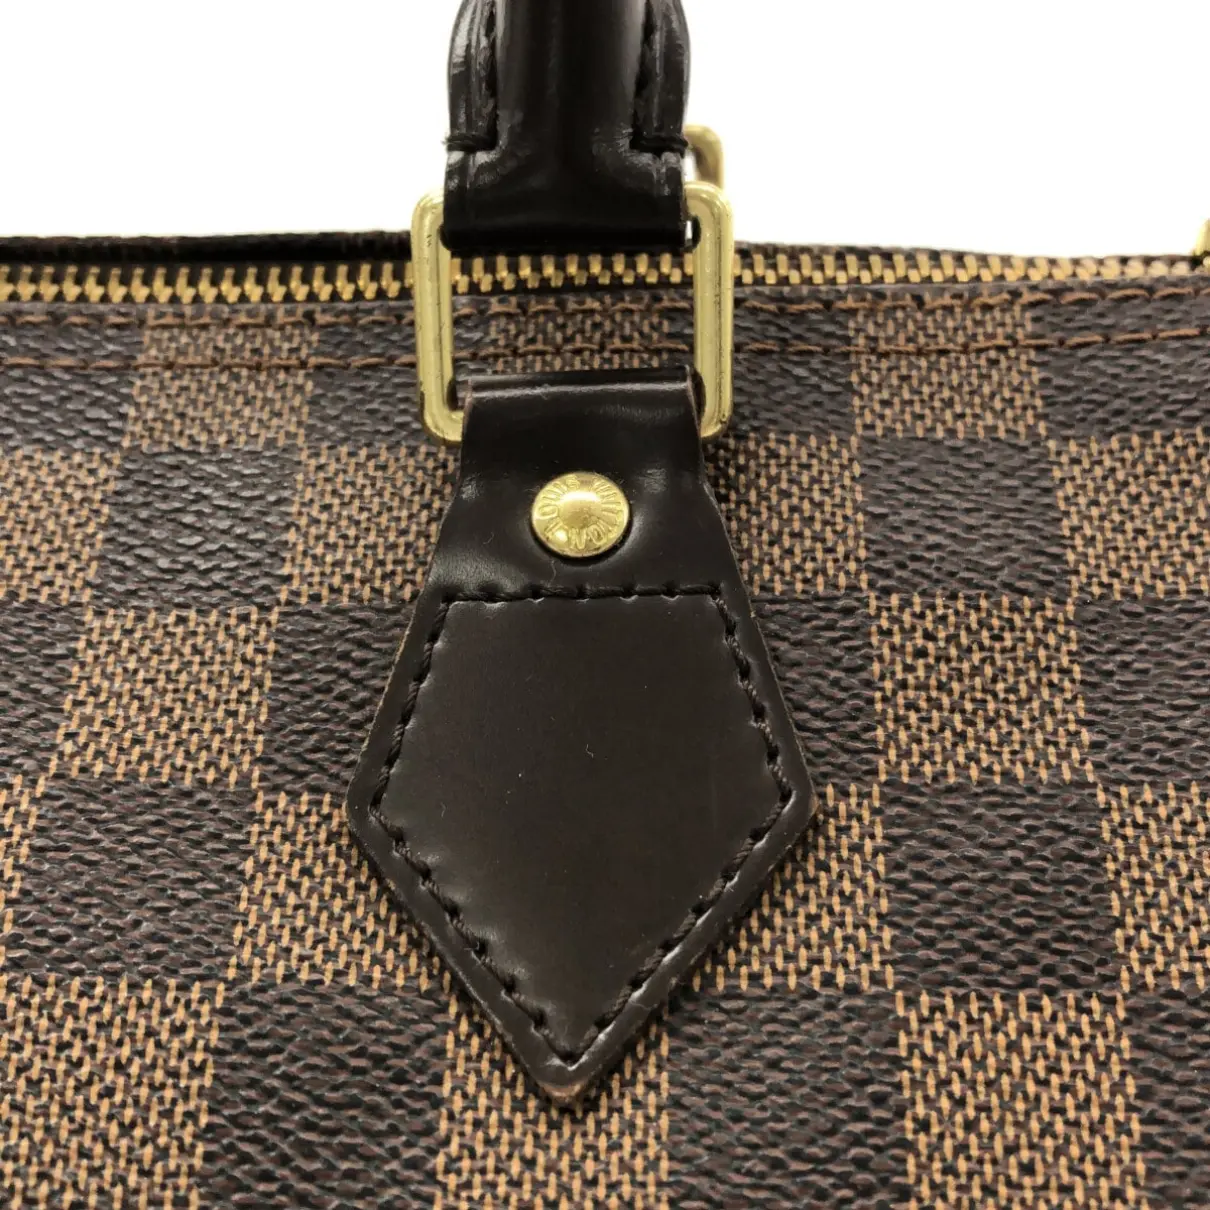 Buy Louis Vuitton Speedy handbag online